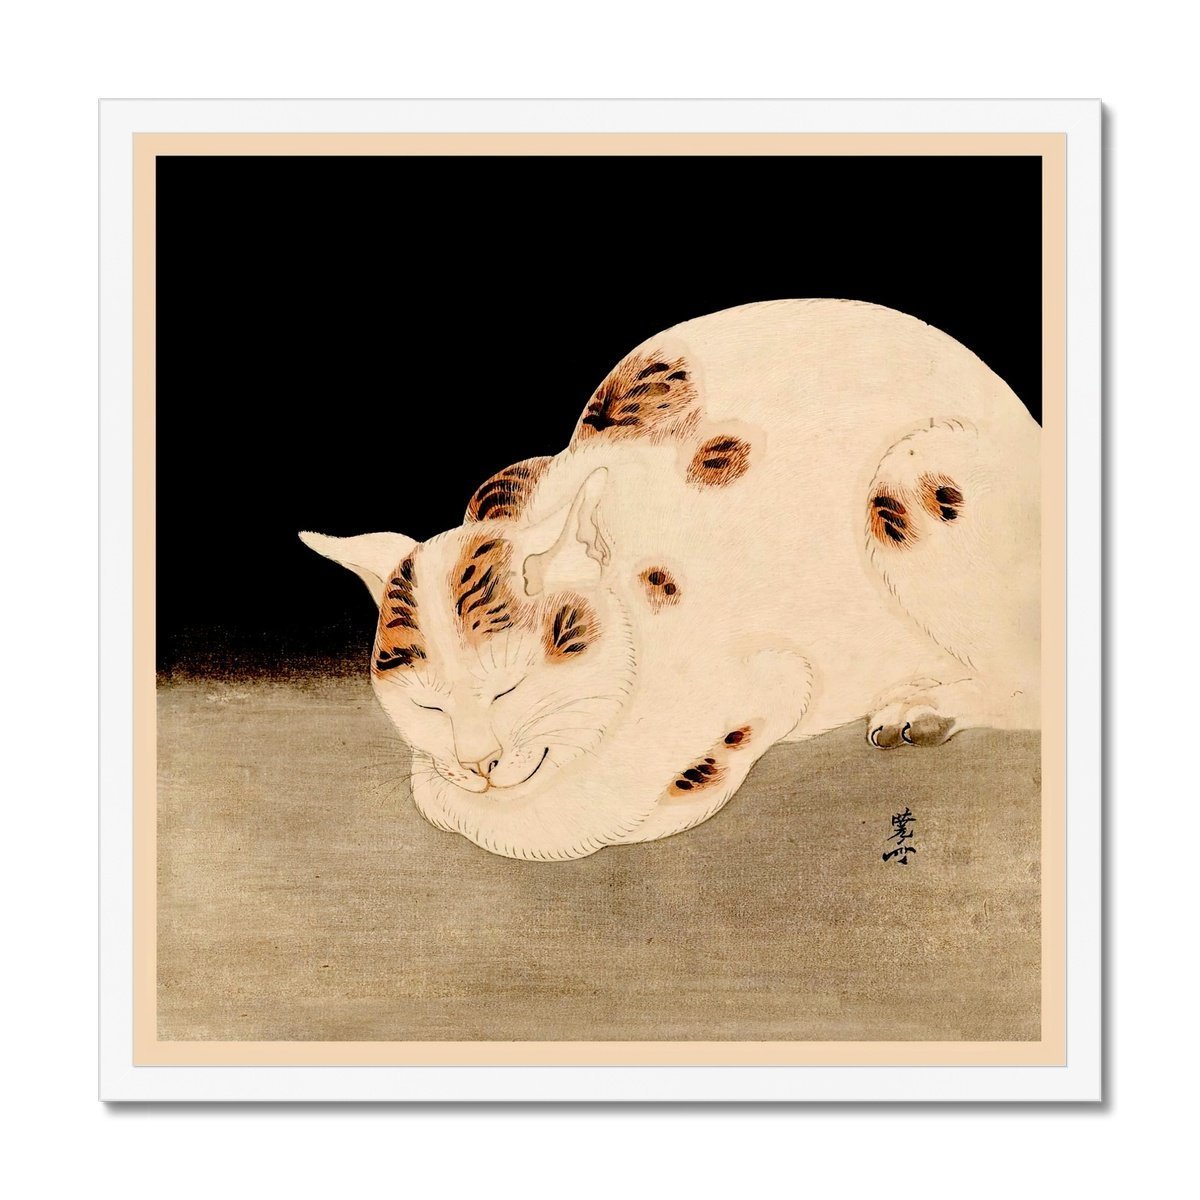 Framed Print 12"x12" / White Frame Cute Sleeping Cat (Kawanabe Kyosai) Woodblock Japanese Meiji Ukiyo-e Antique Feline Vintage Kawaii Framed Art Print